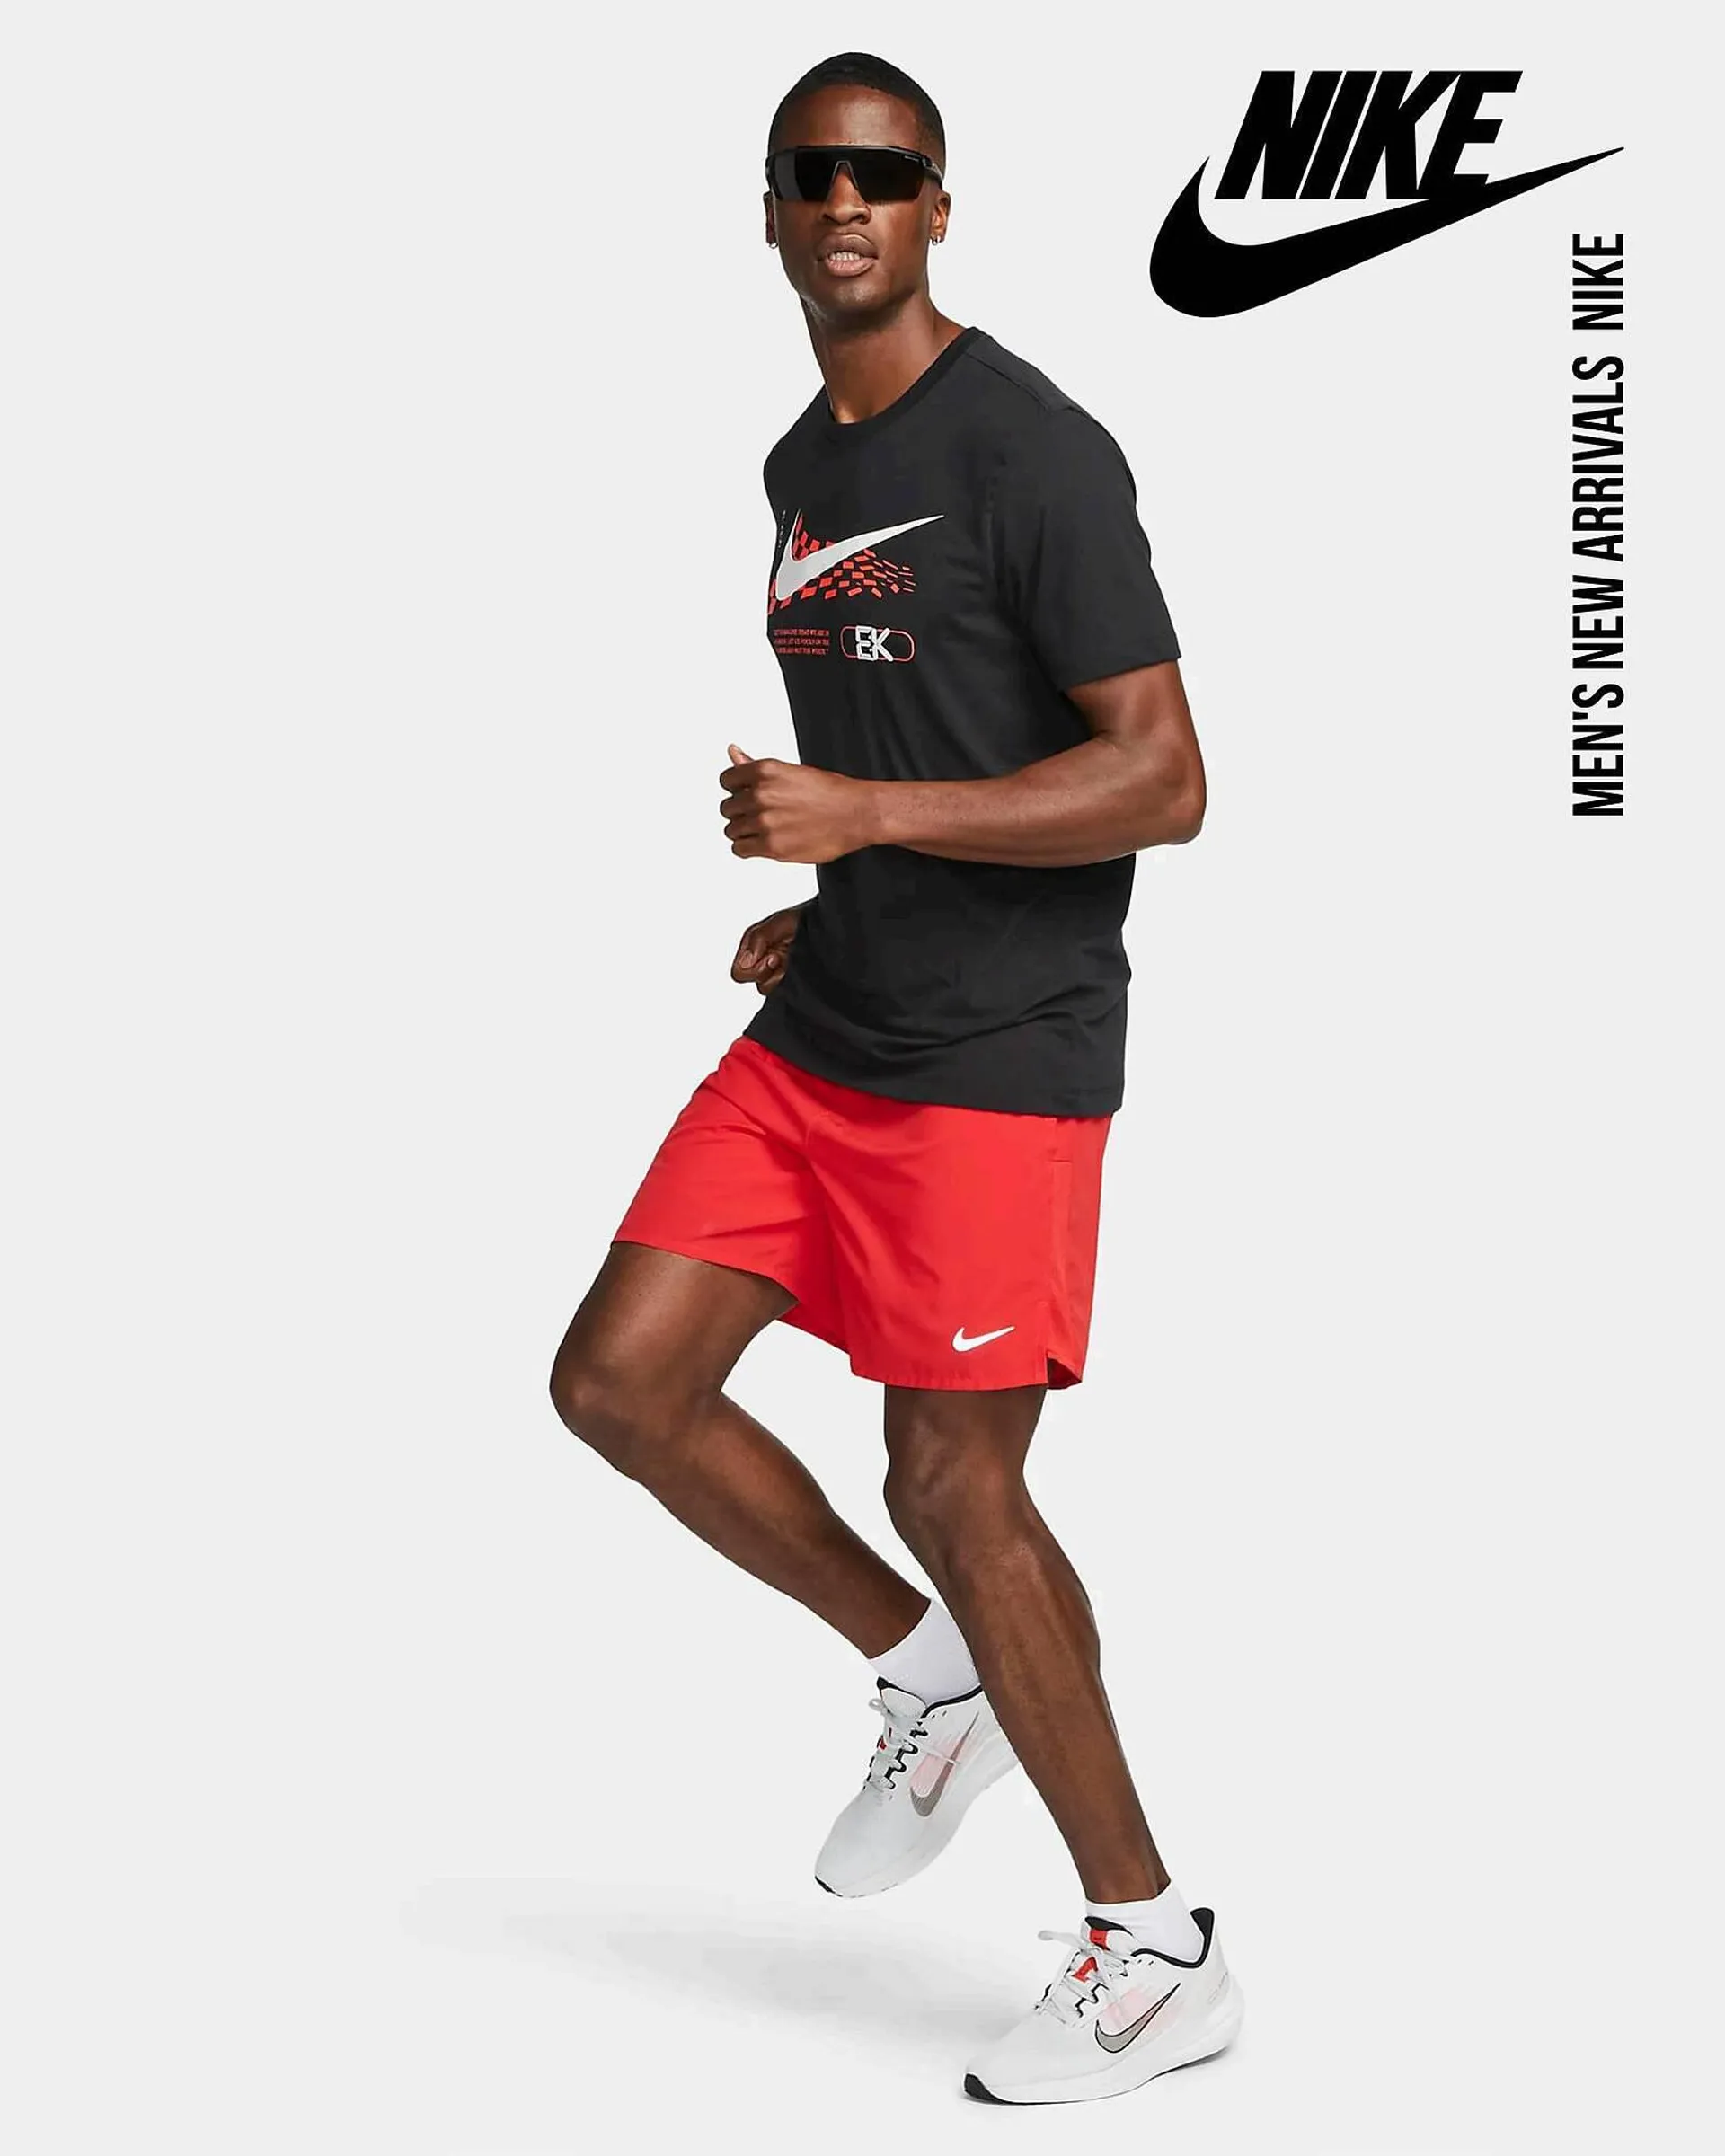 Nike flyer